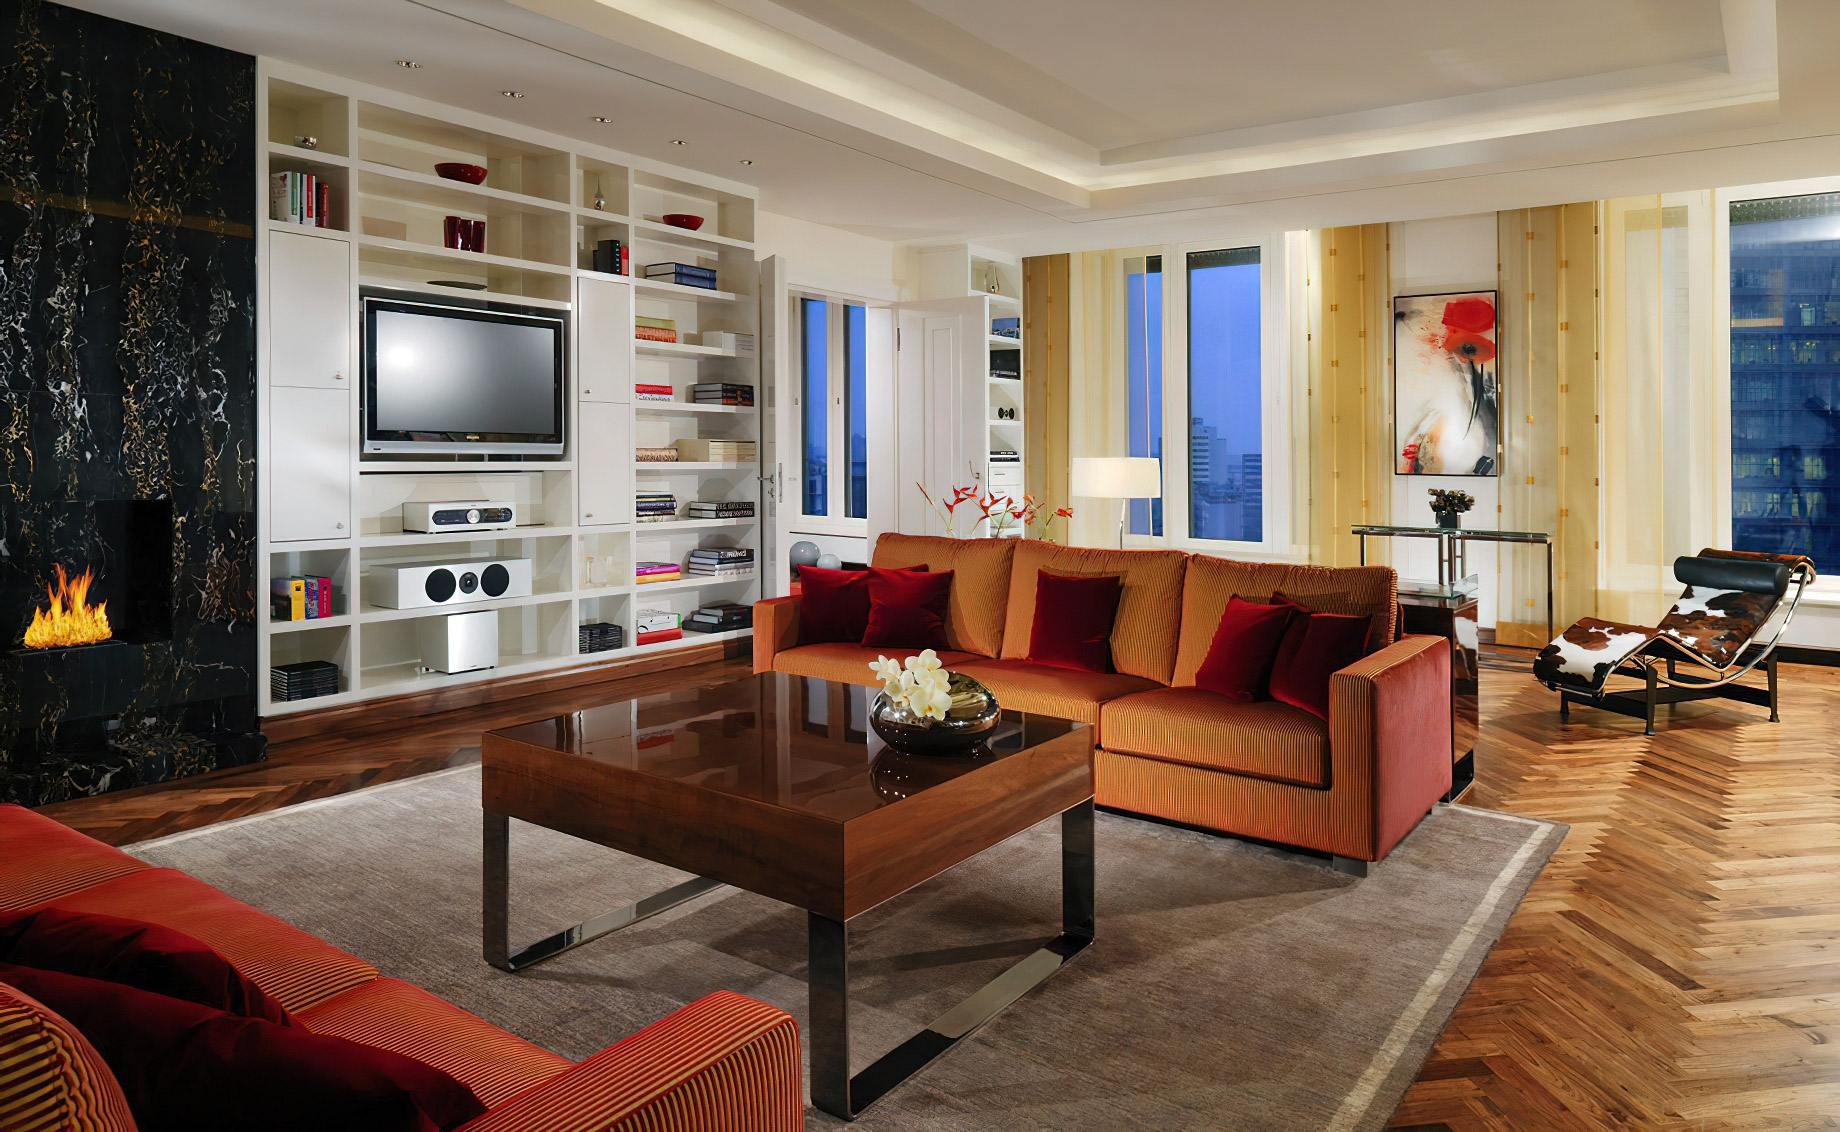 The Ritz-Carlton, Berlin Hotel – Berlin, Germany – The Ritz-Carlton Penthouse Living Room